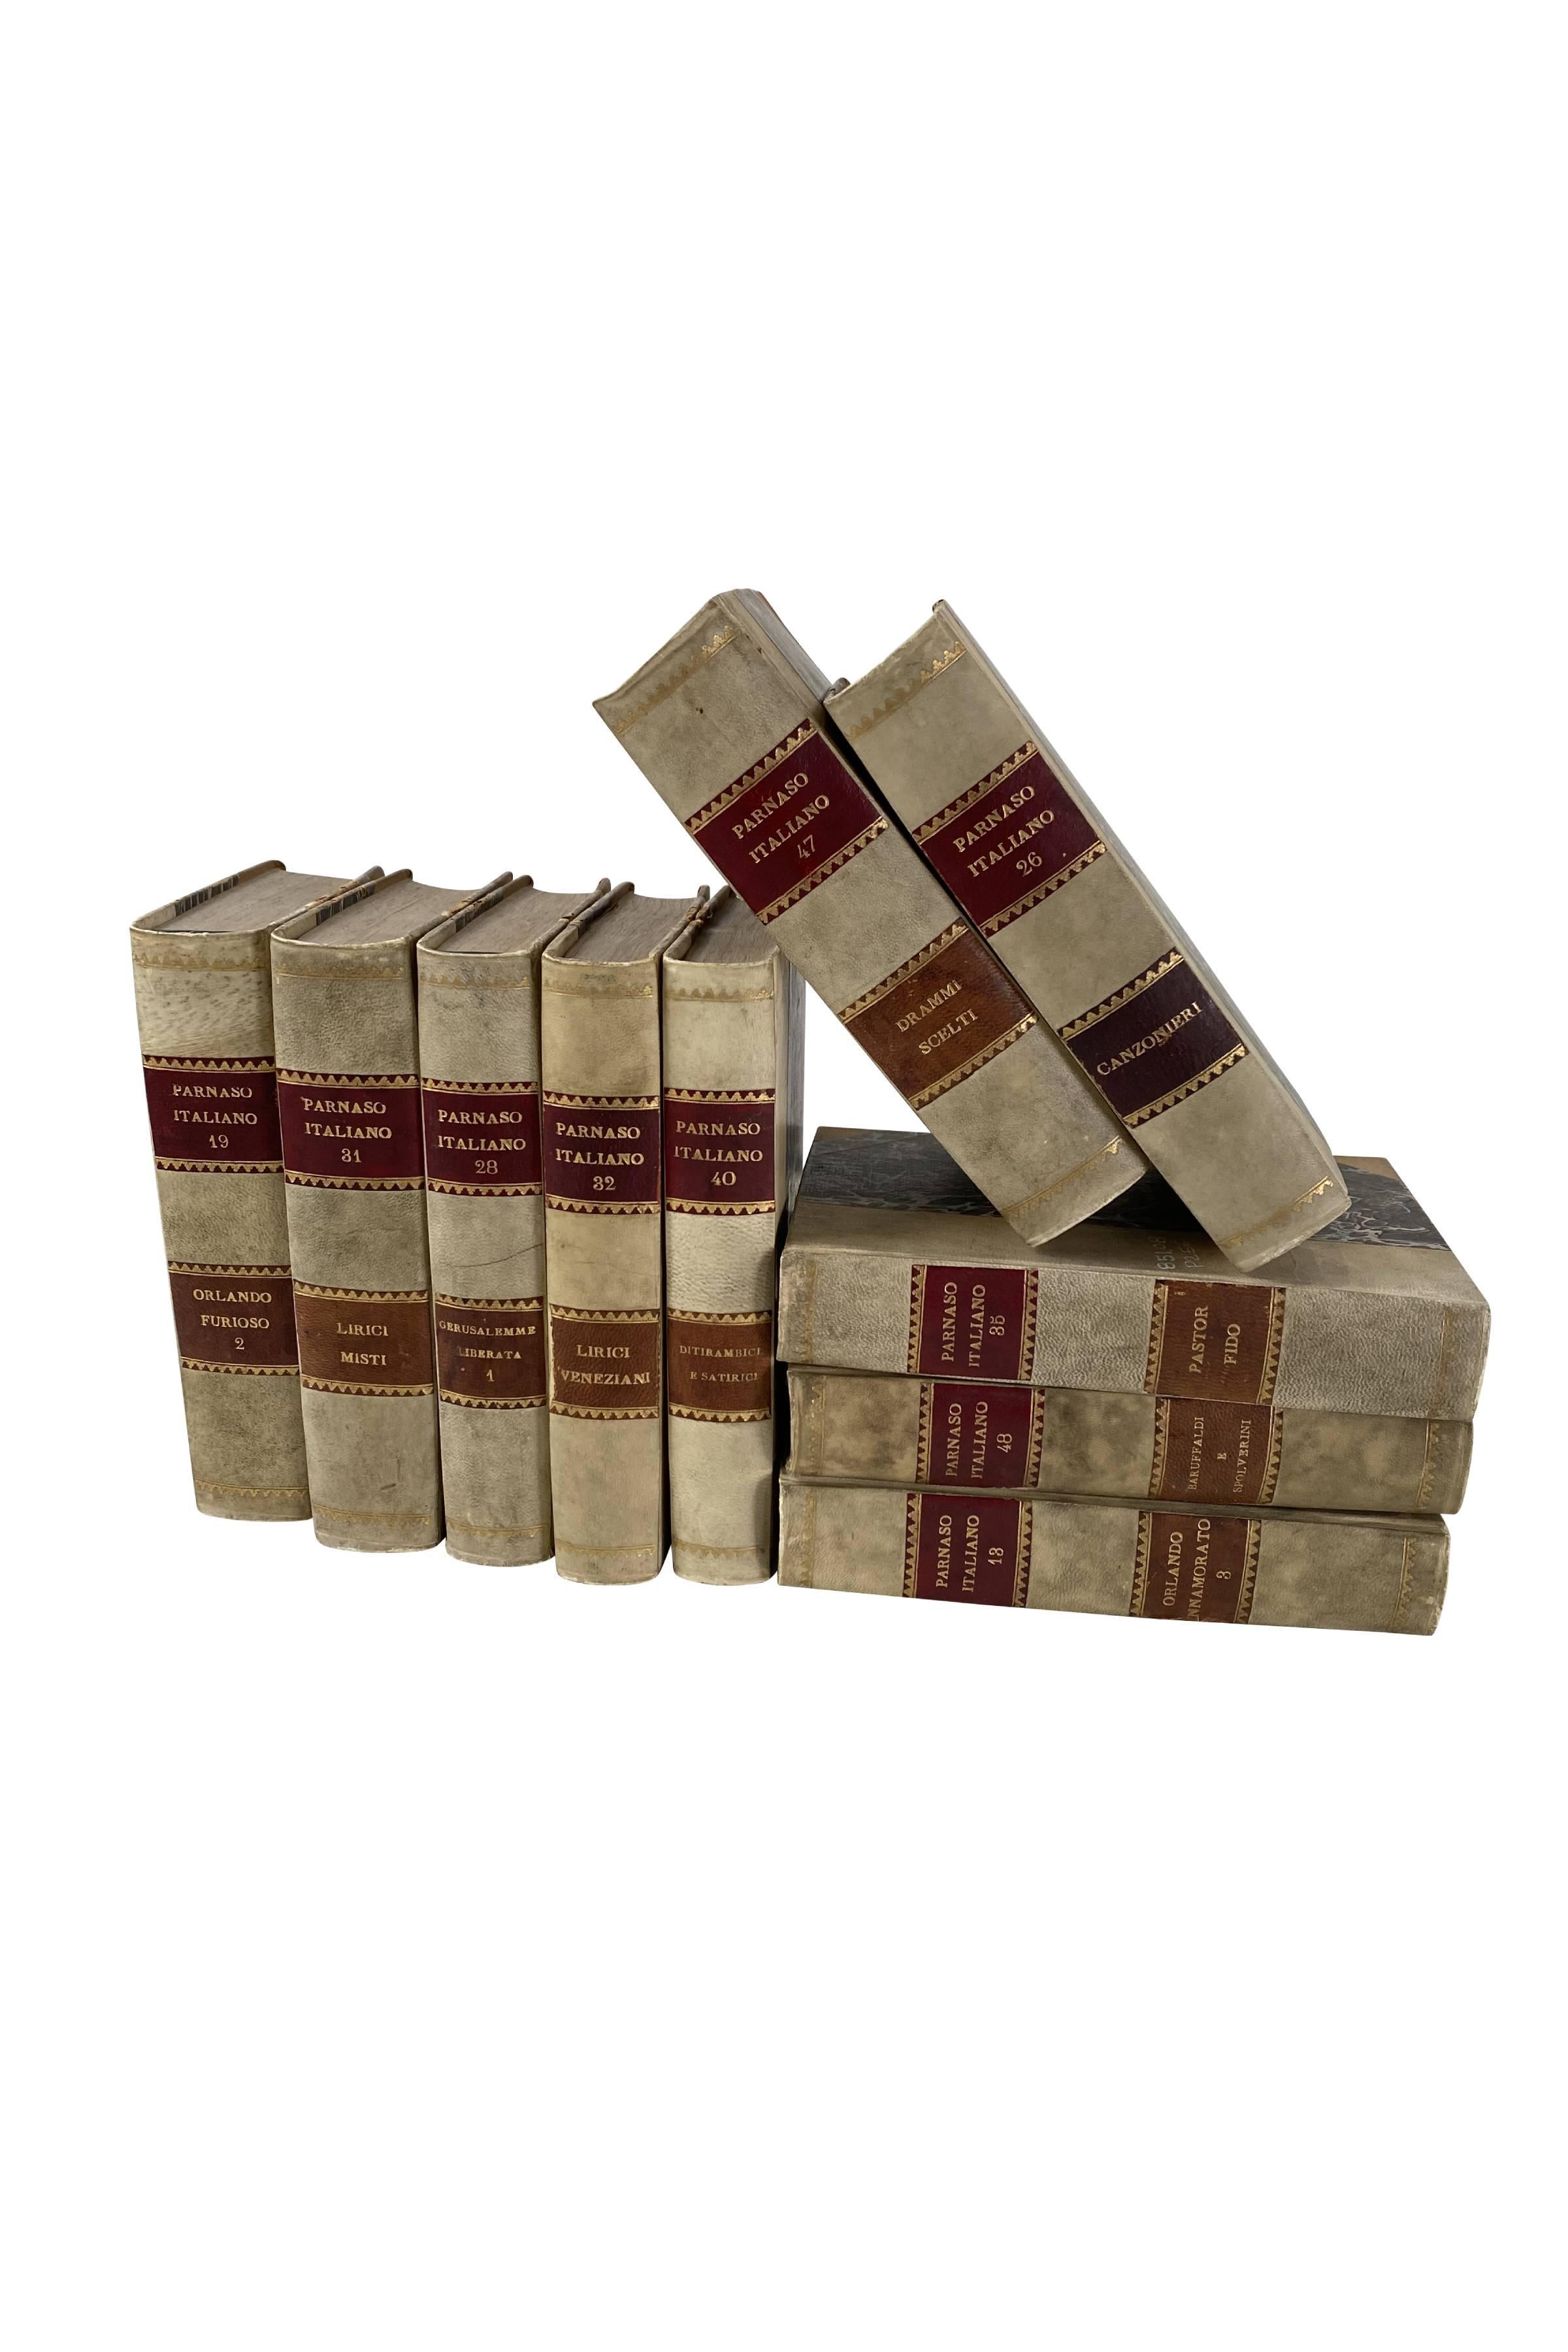 Neoclassical Antique Italian “Parnaso Italiano” Literary Collection For Sale